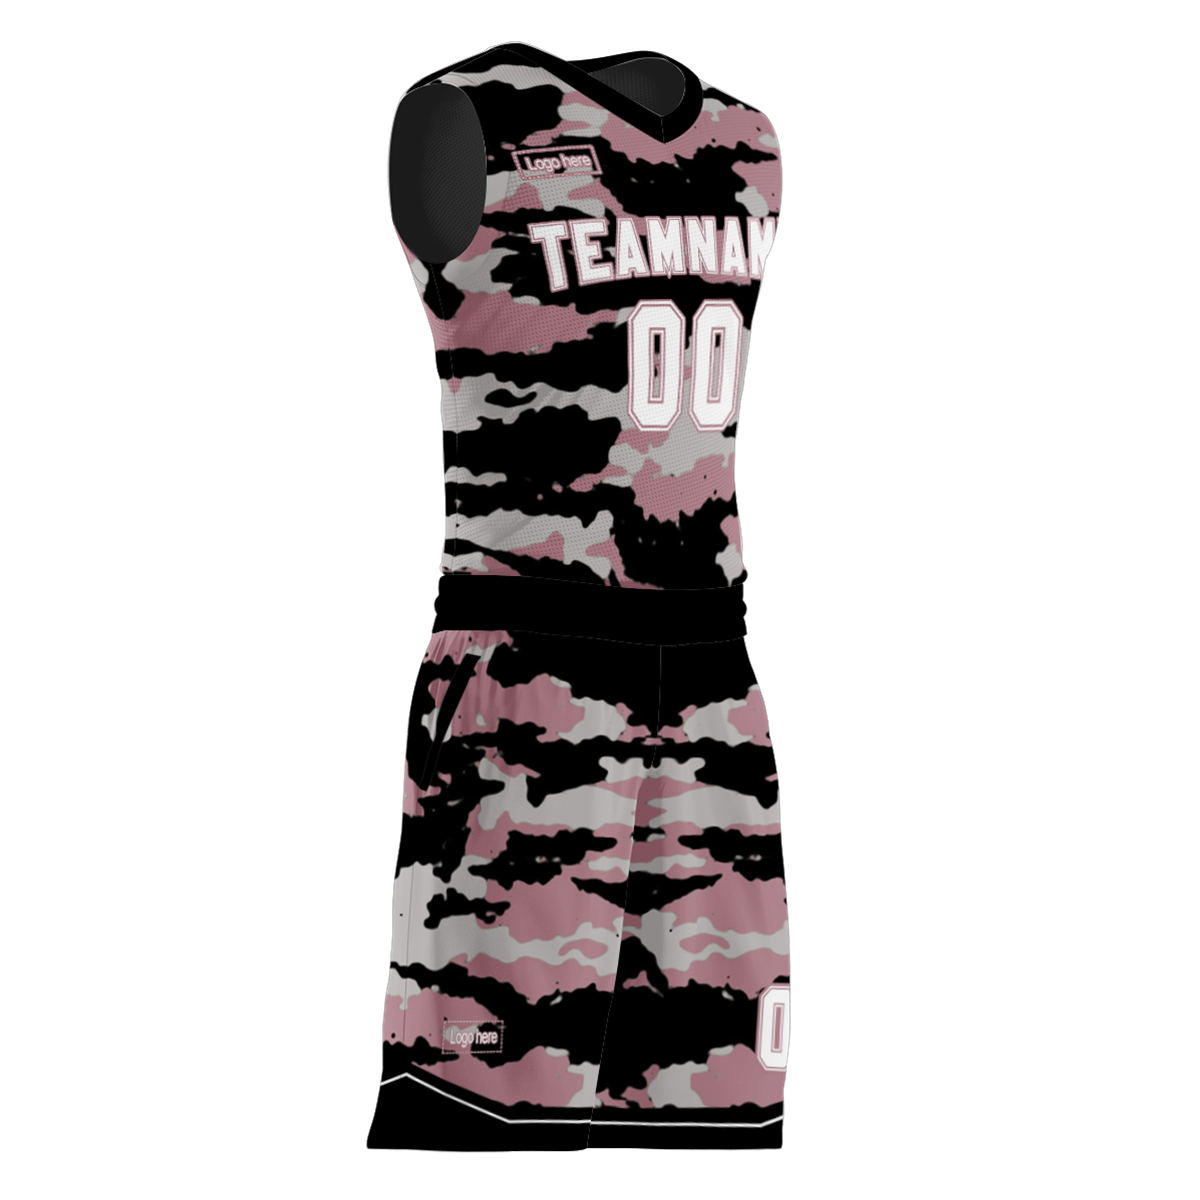 New Custom Printed Jerseys Fashion Sleeve College Basketball Clothes Shirts